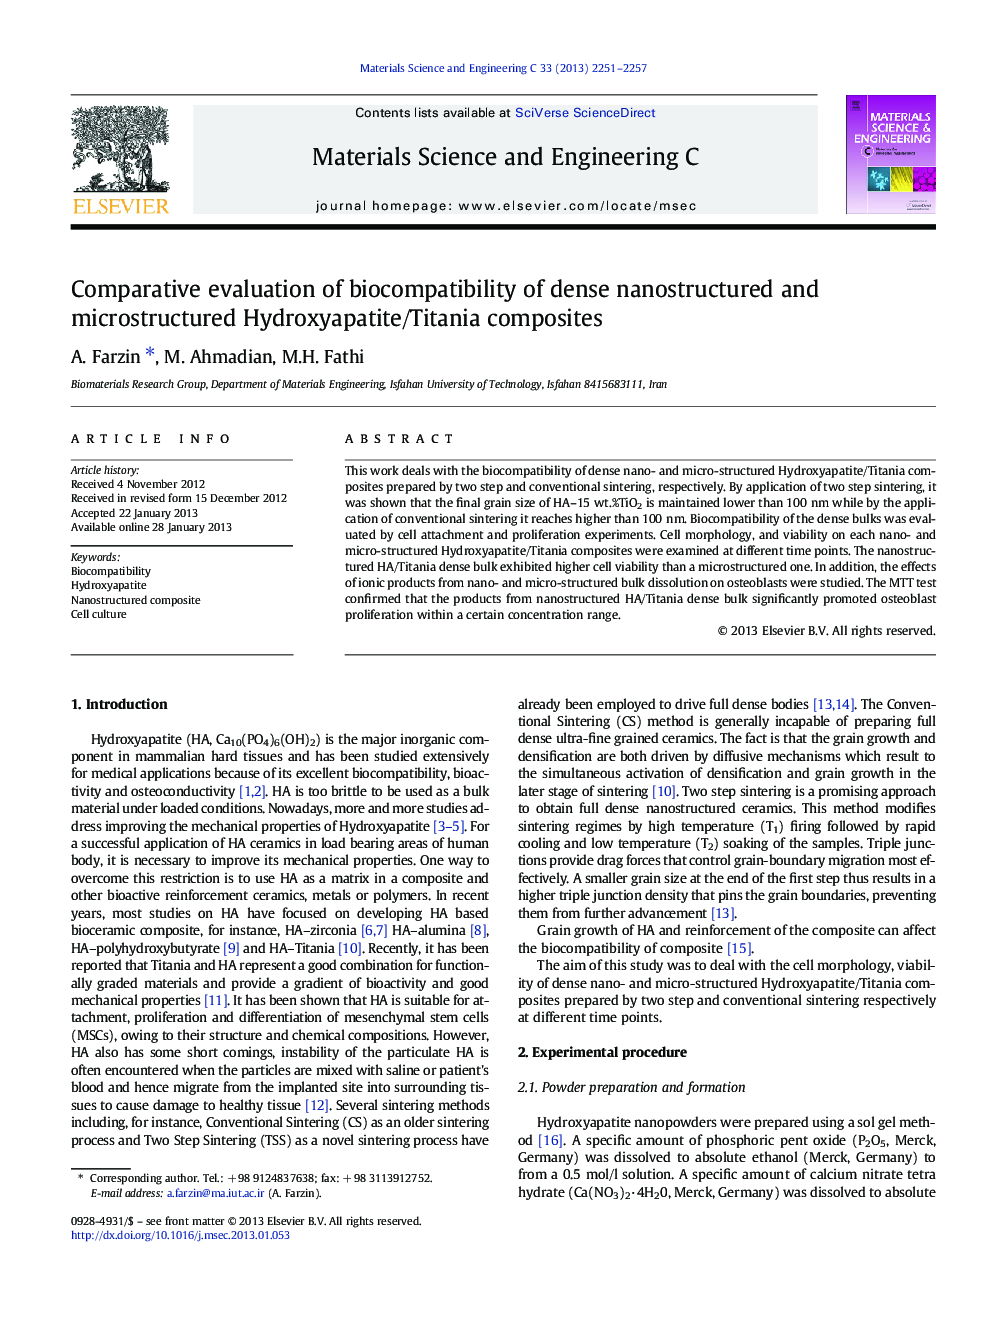 Comparative evaluation of biocompatibility of dense nanostructured and microstructured Hydroxyapatite/Titania composites